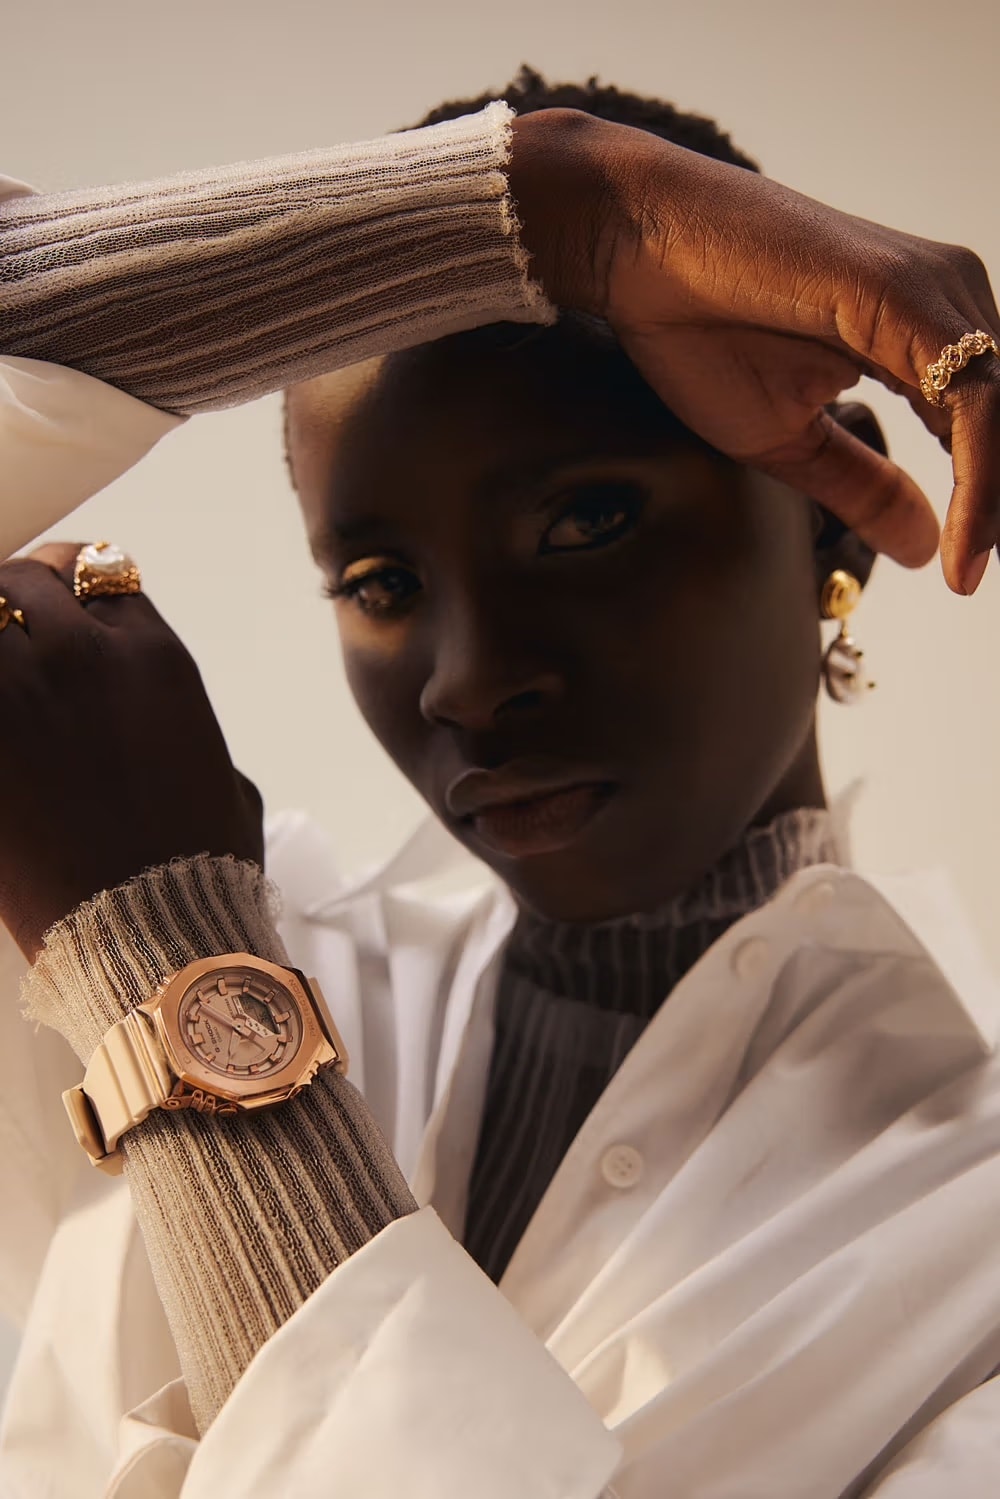 Gショックから上品さとタフネスな機能性を兼ね備えたウィメンズモデルの腕時計がリリース g-shock women's model watch release info